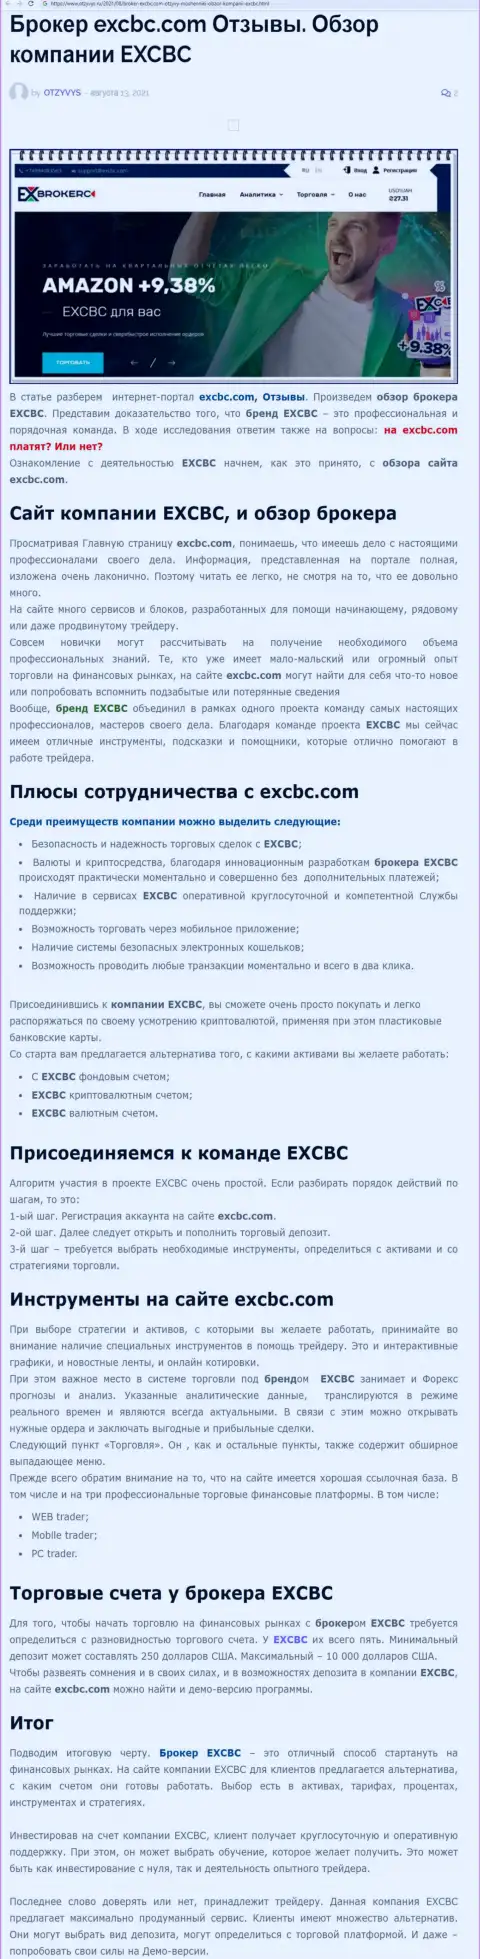 Материал о форекс дилинговой компании EXCBC на web-ресурсе отзывс ру